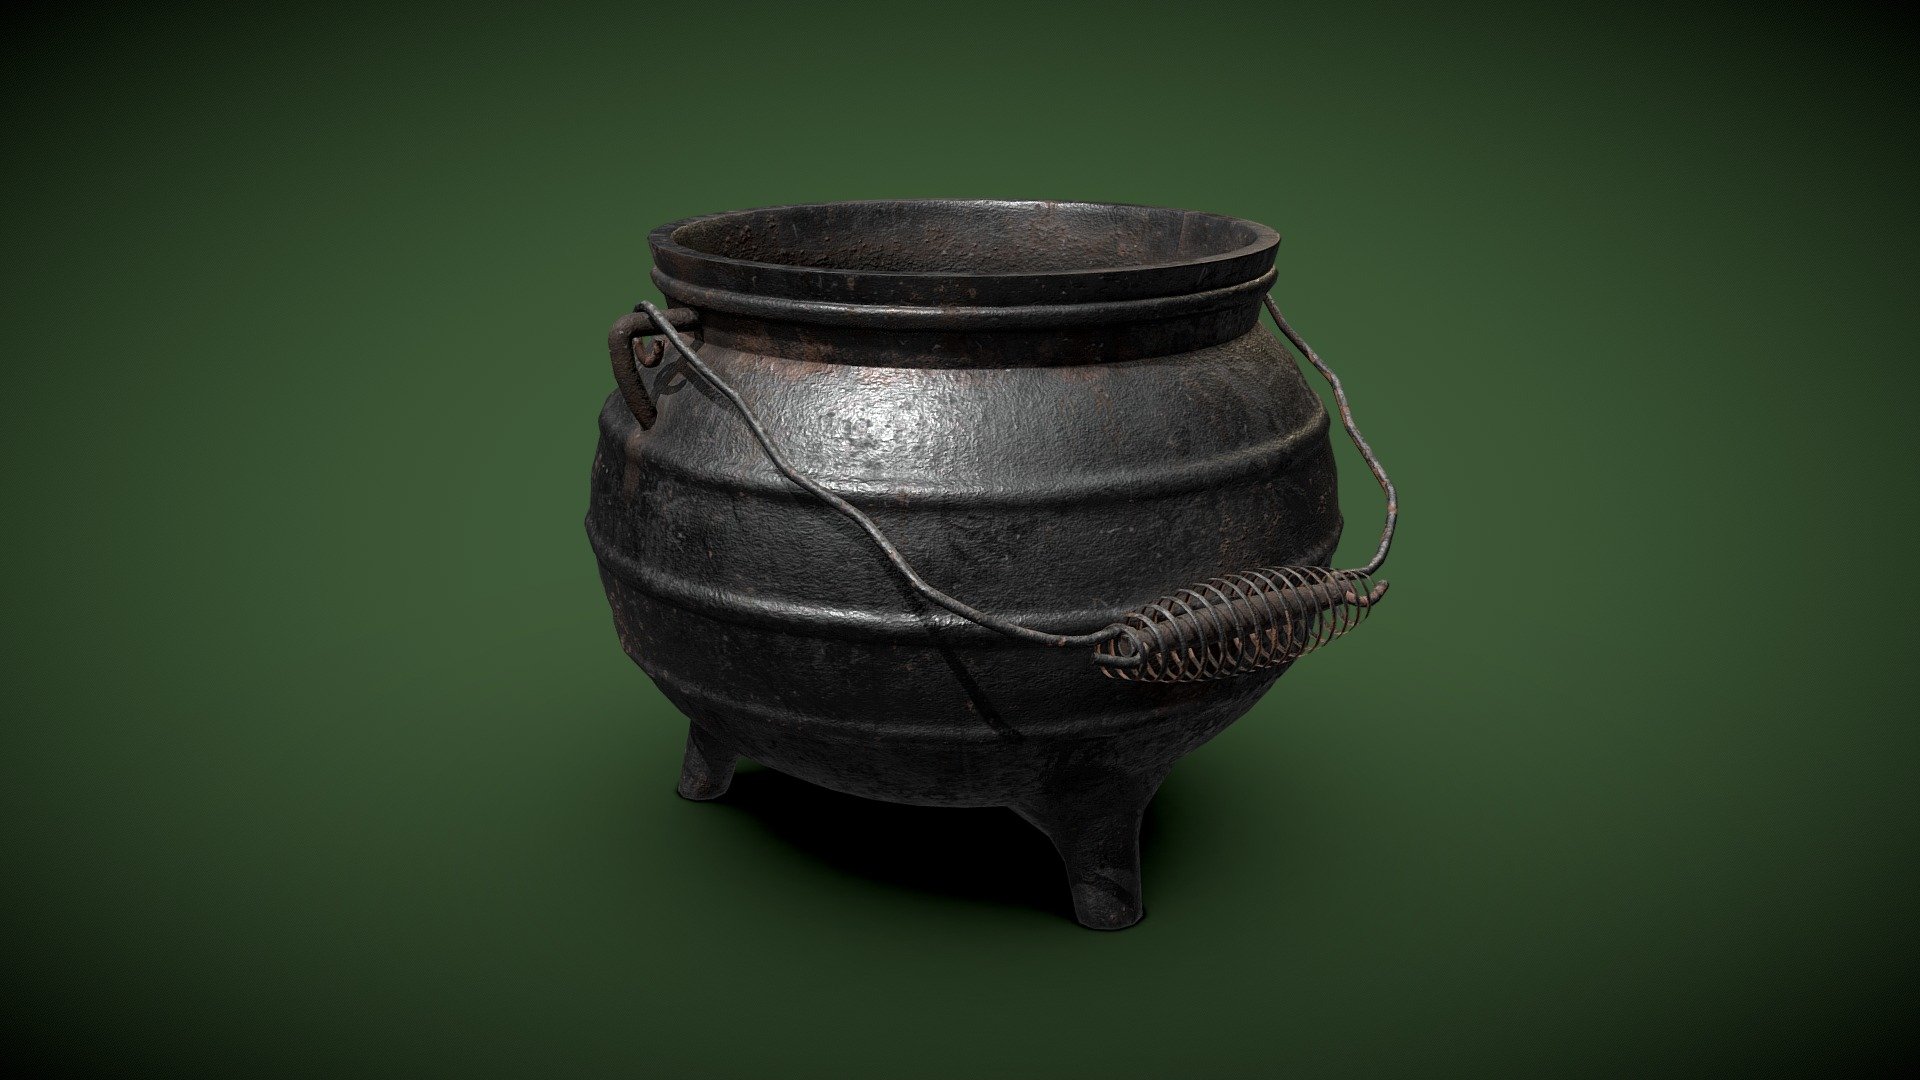 Cauldron, part of a set of 5.
Game ready 3d model